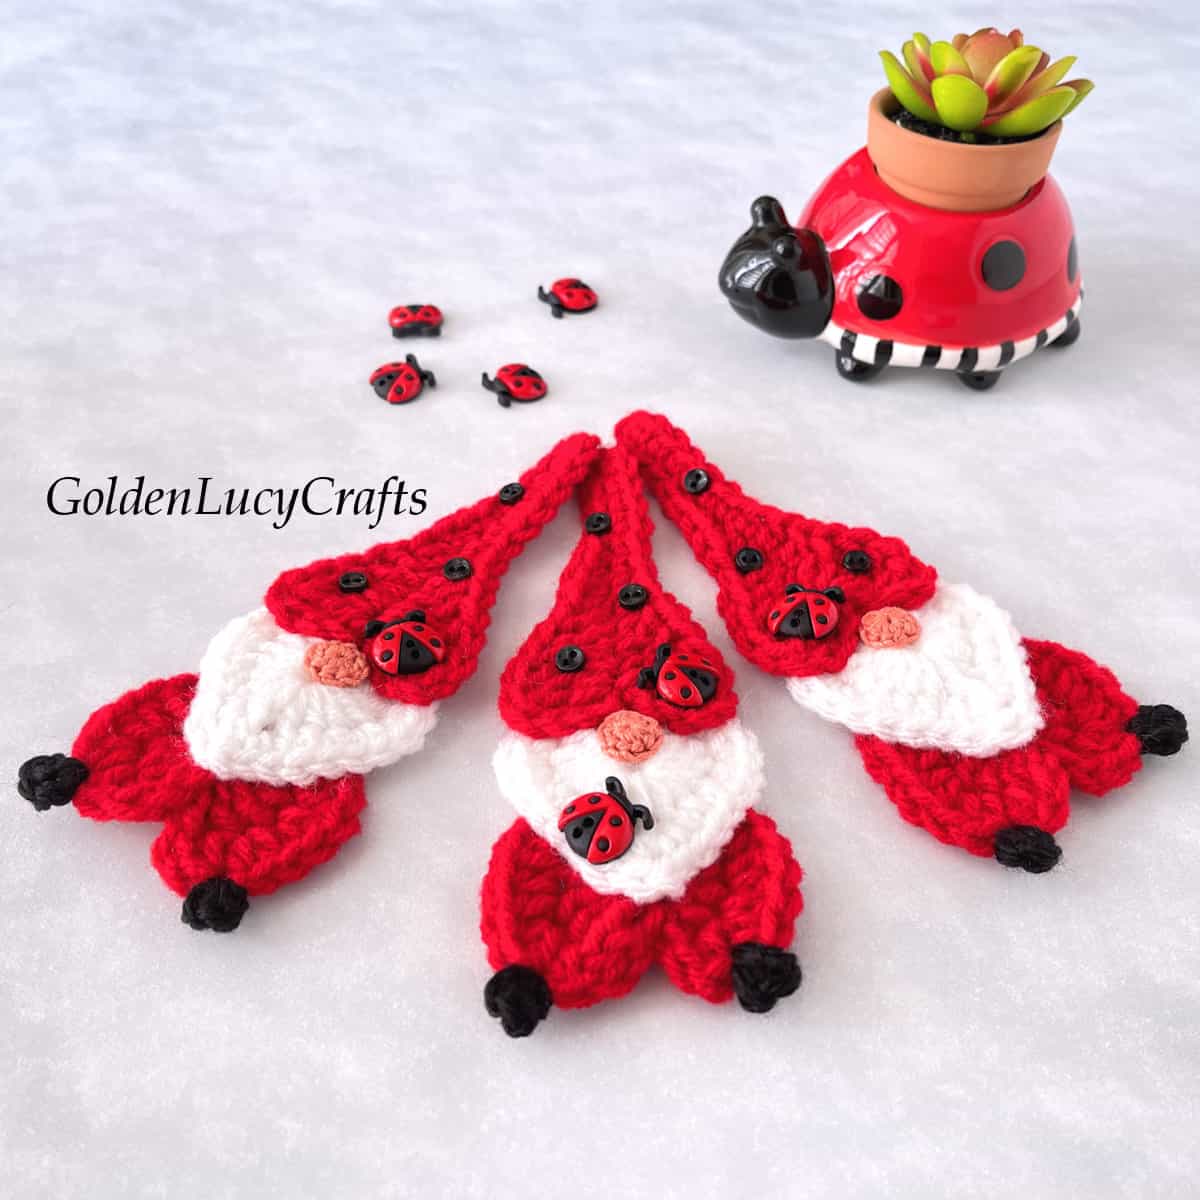 Three crochet ladybug gnomes.